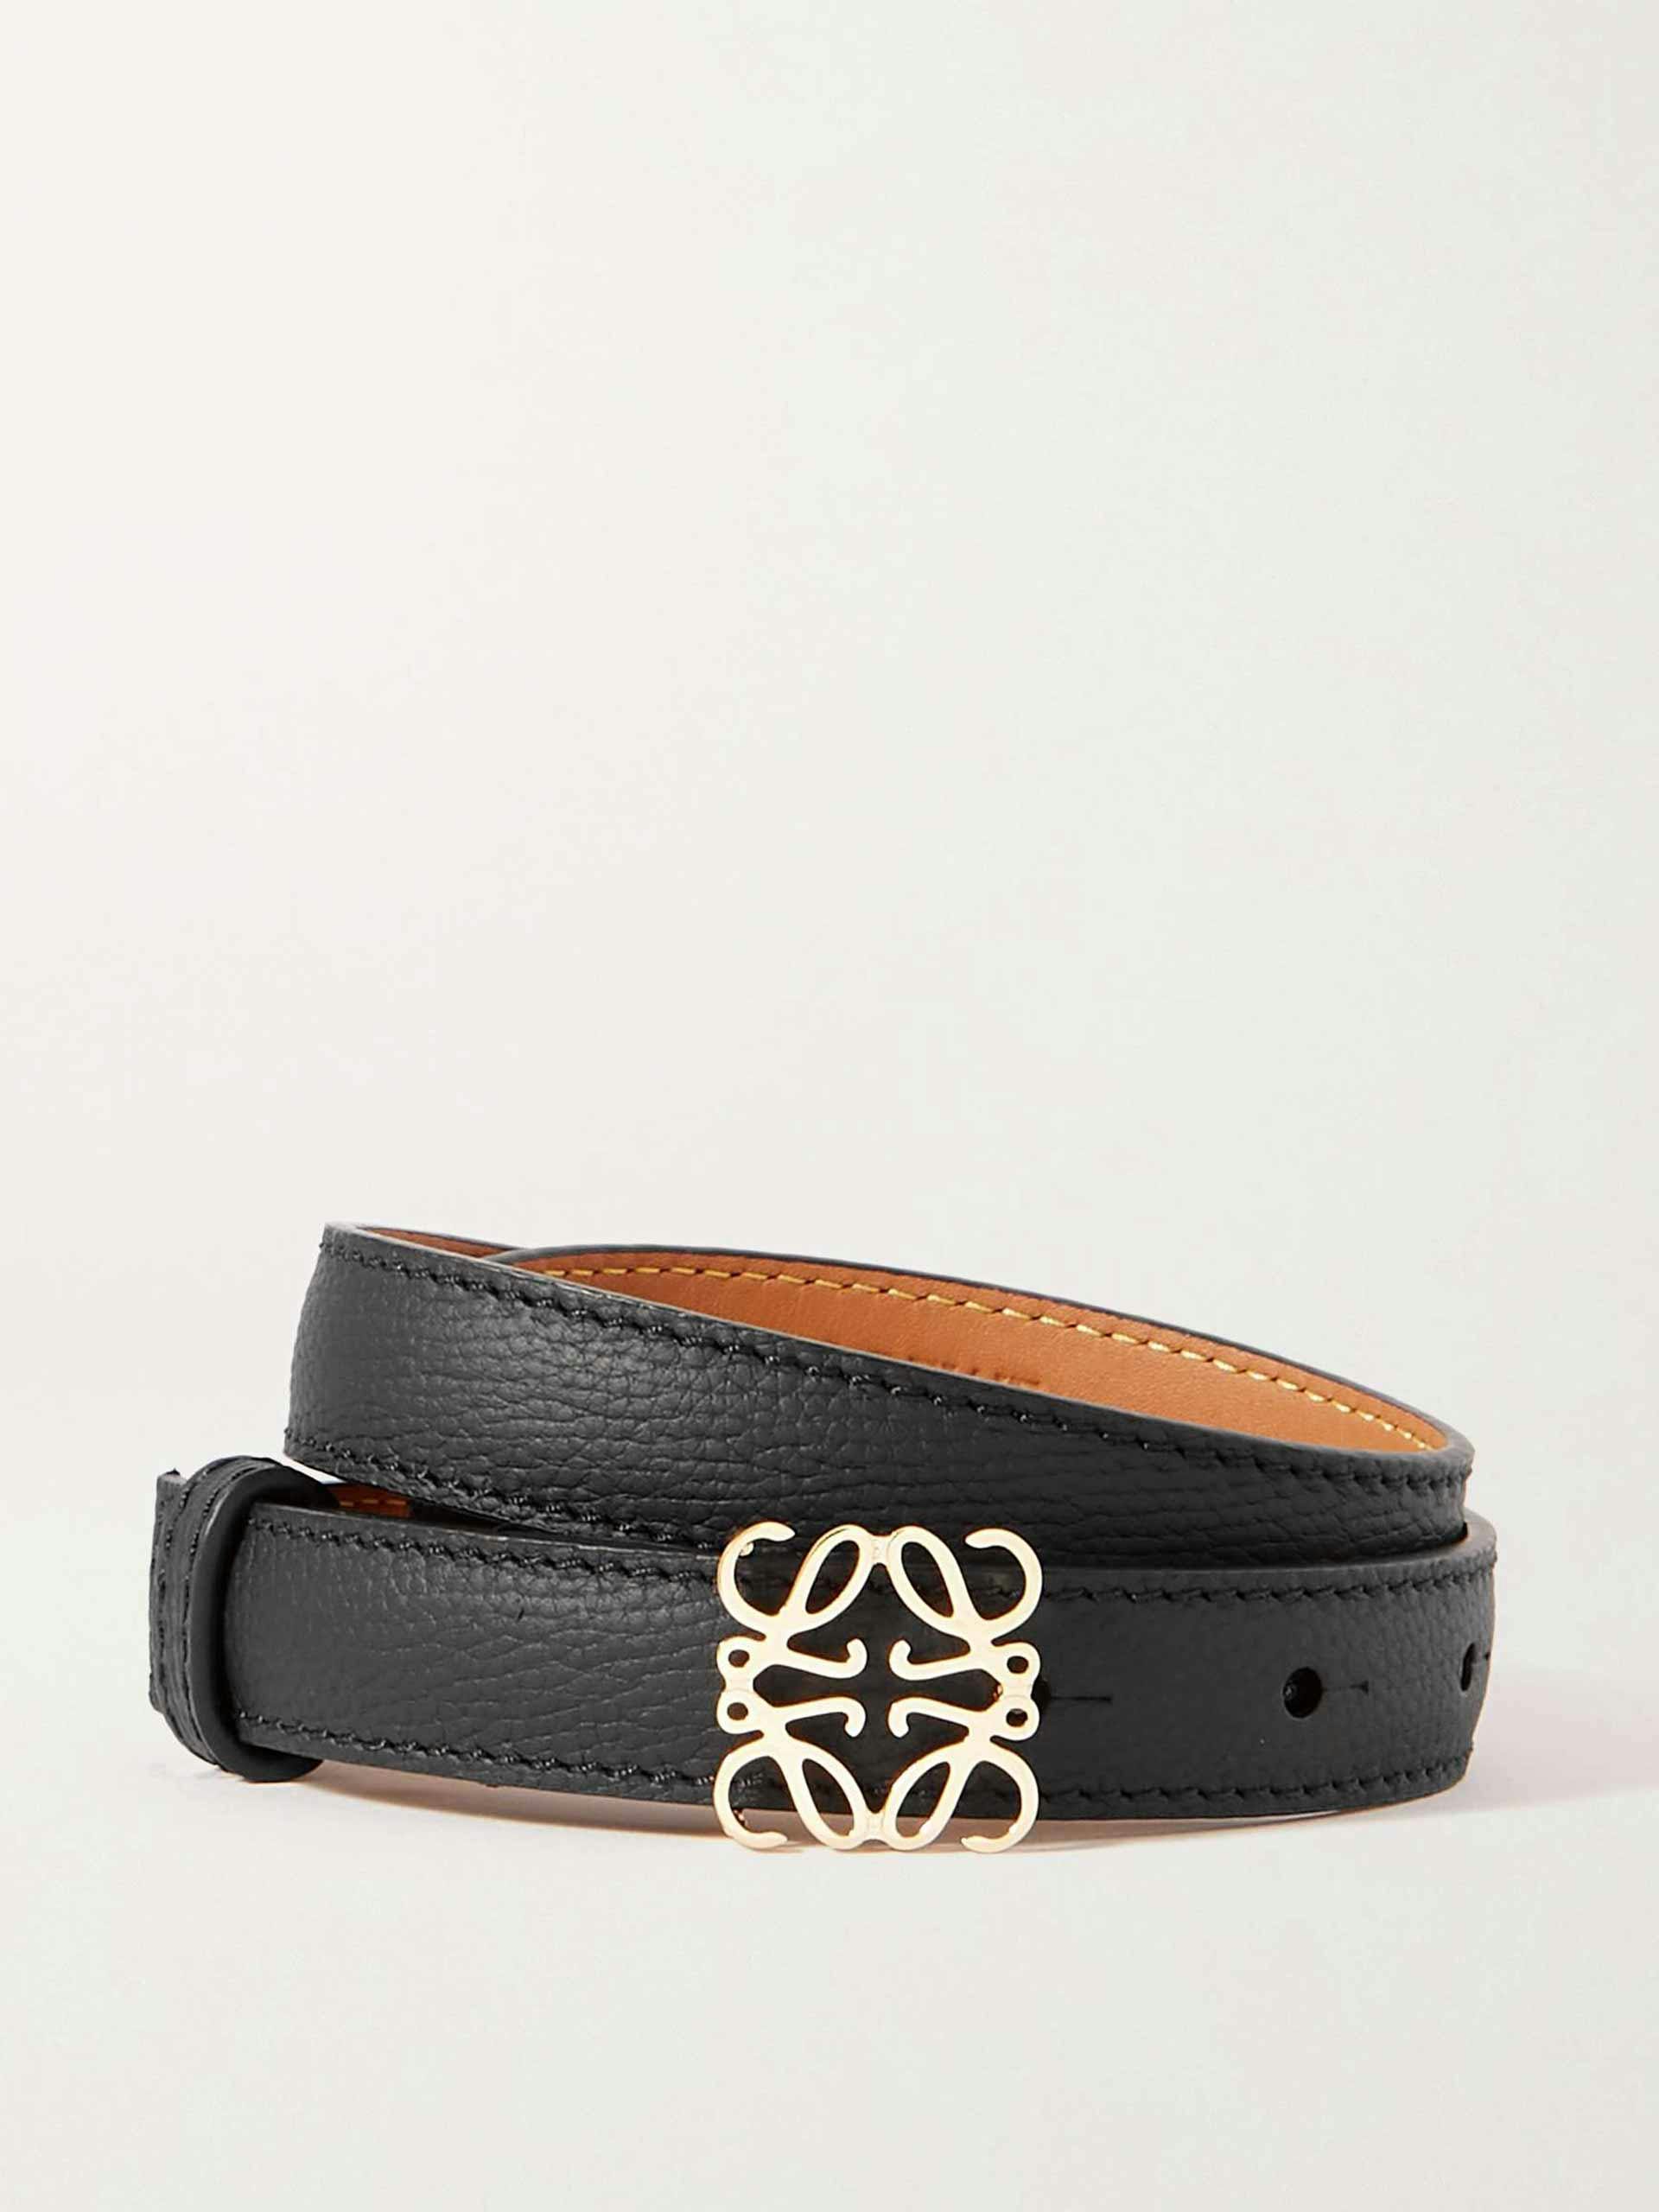 Black textured leather belt